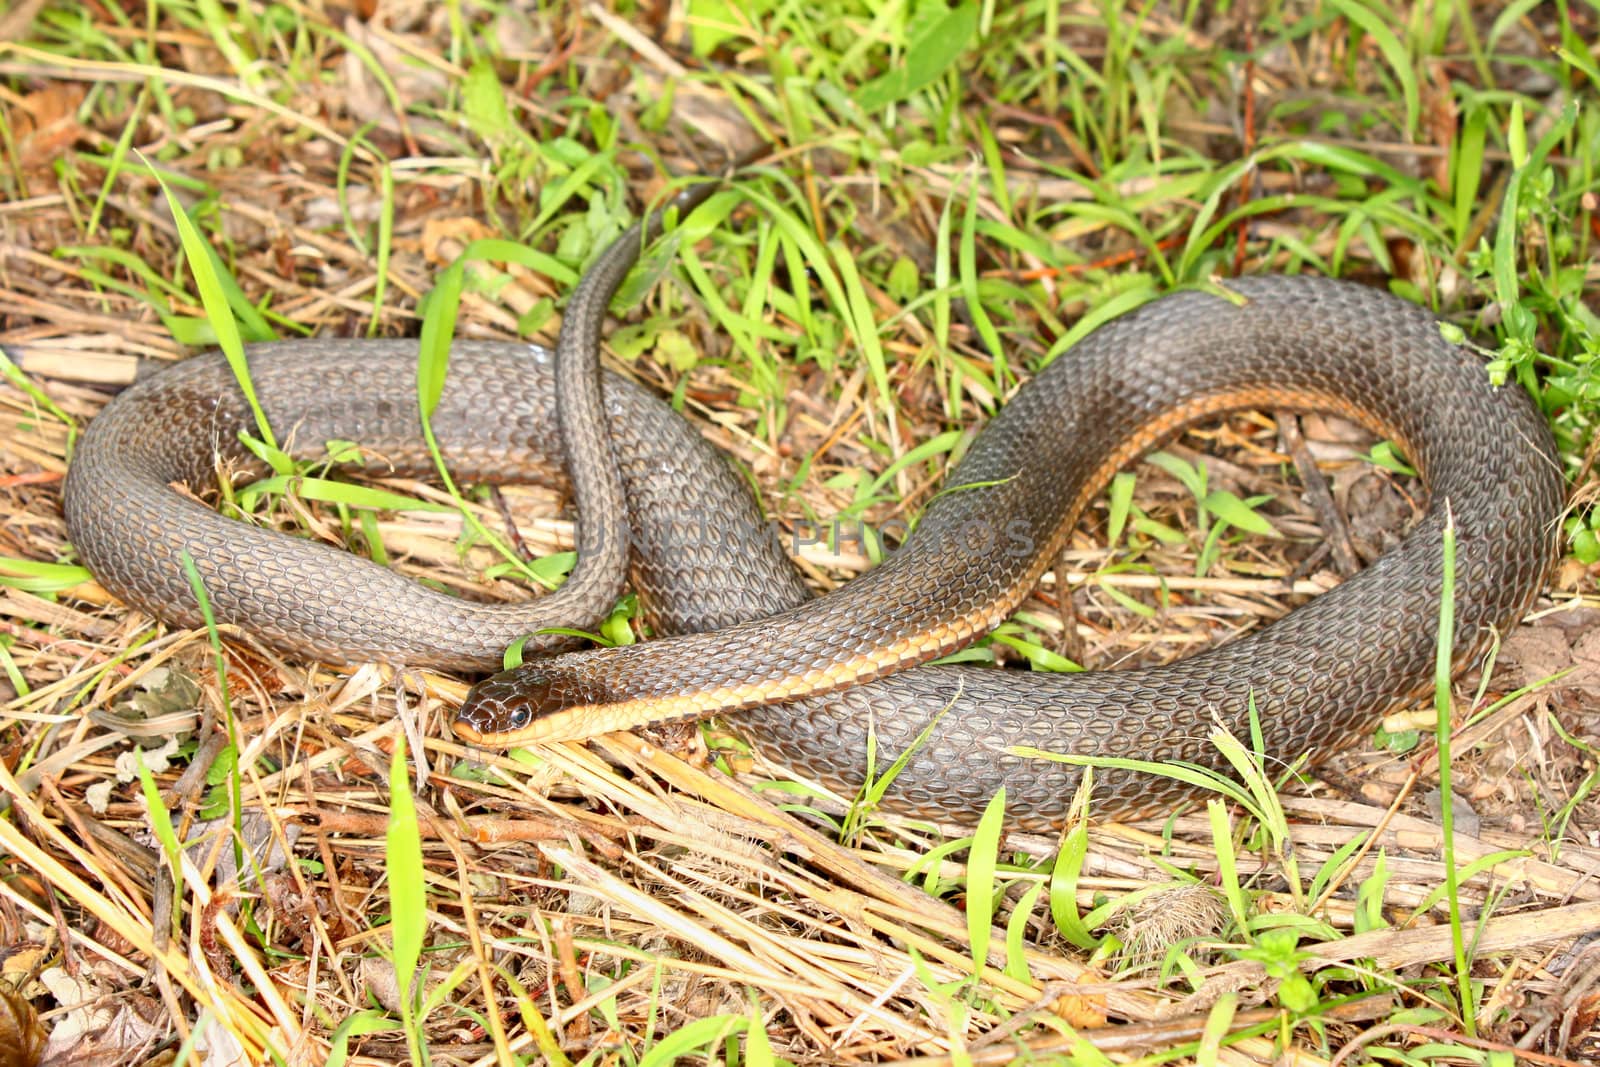 Queen Snake (Regina septemvittata) by Wirepec